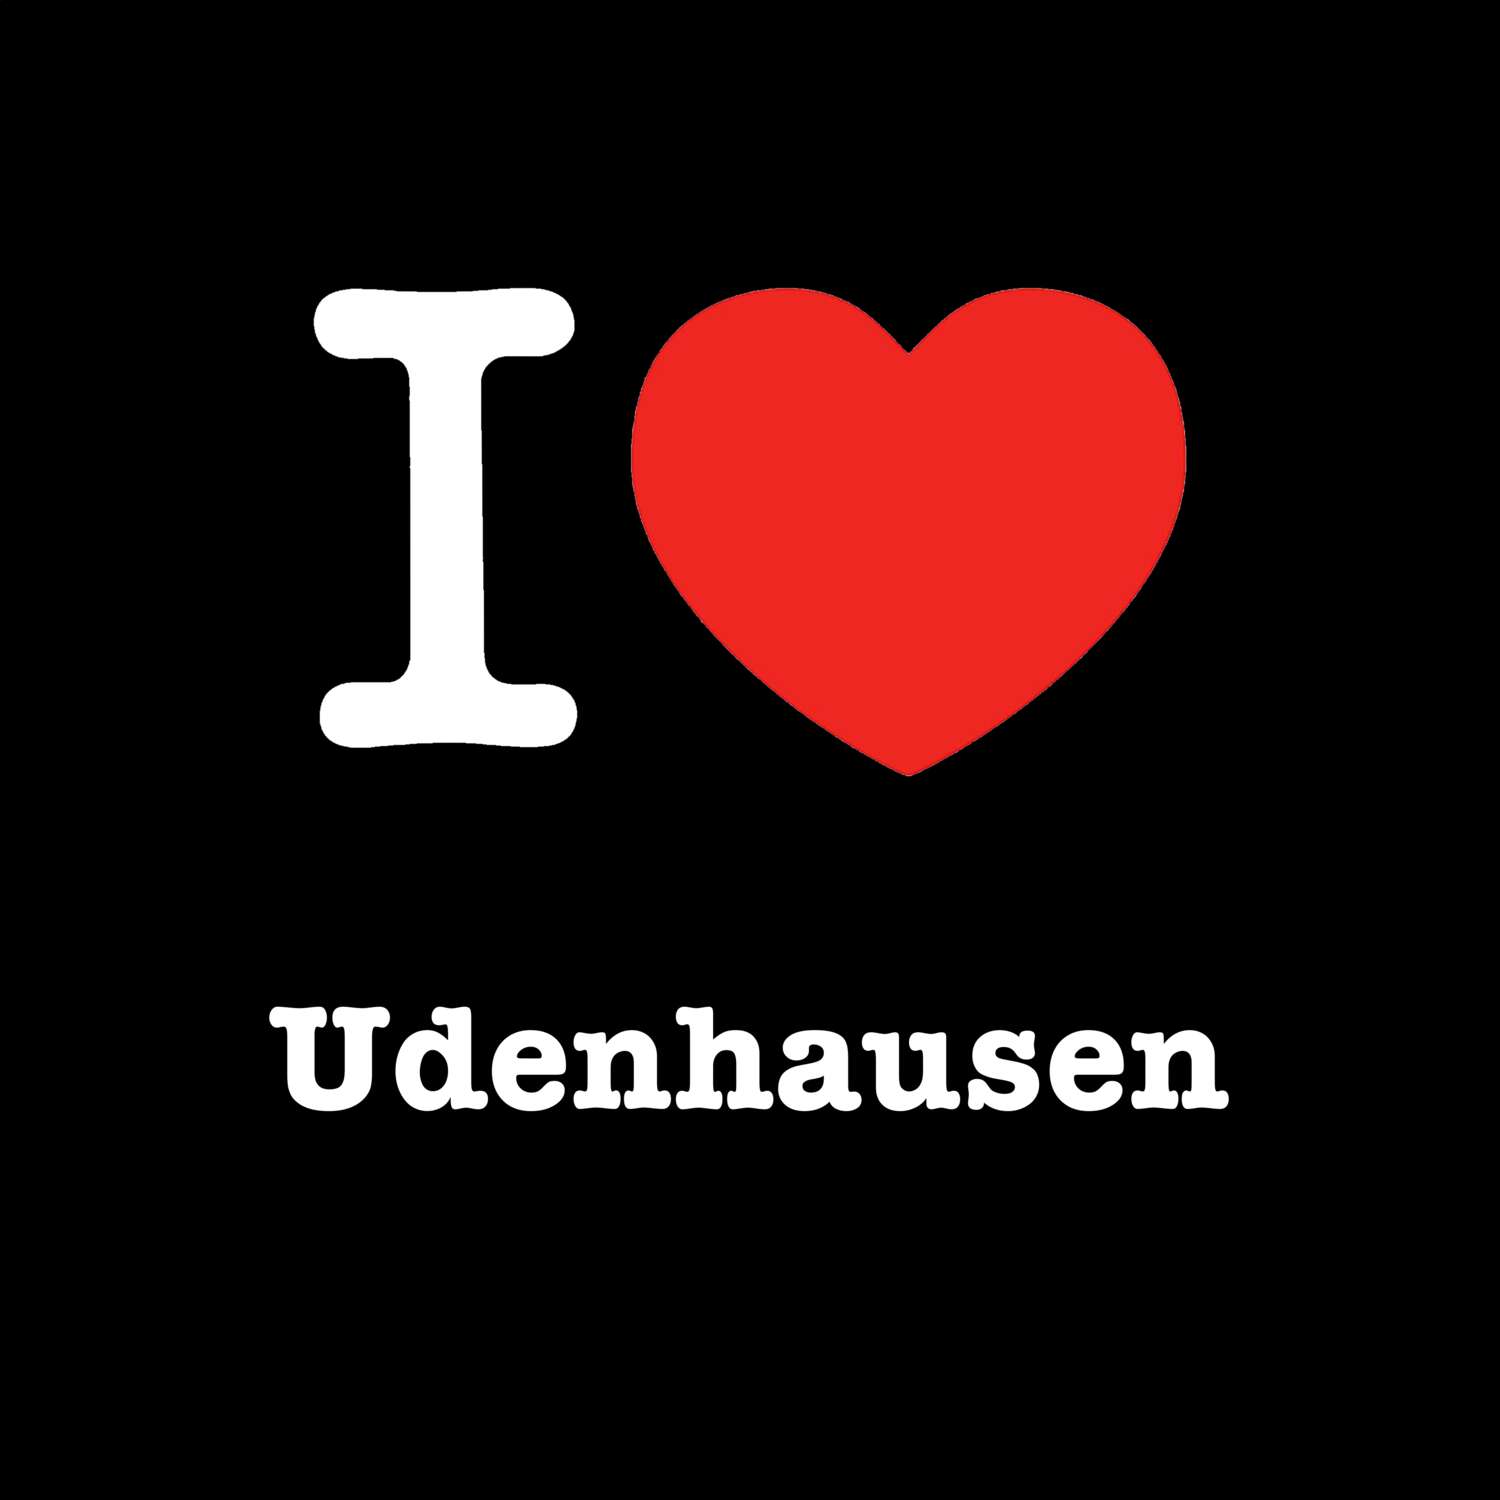 Udenhausen T-Shirt »I love«